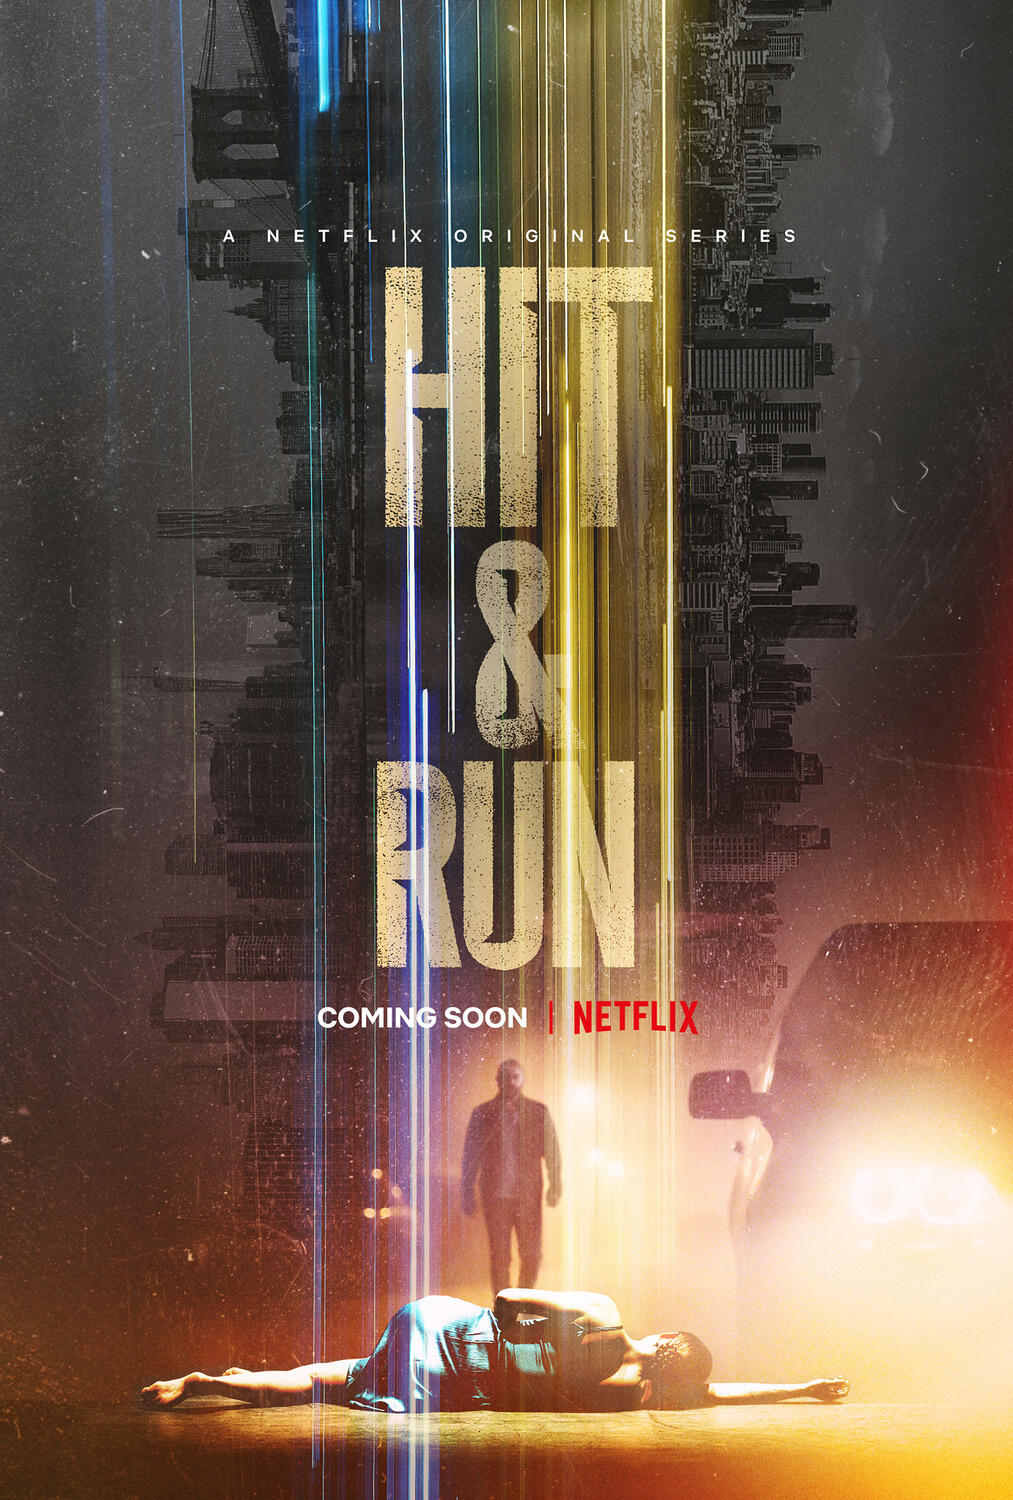 Hit & Run Season 1: Release Date, Teaser, Trailer, Cast and Latest Updates!